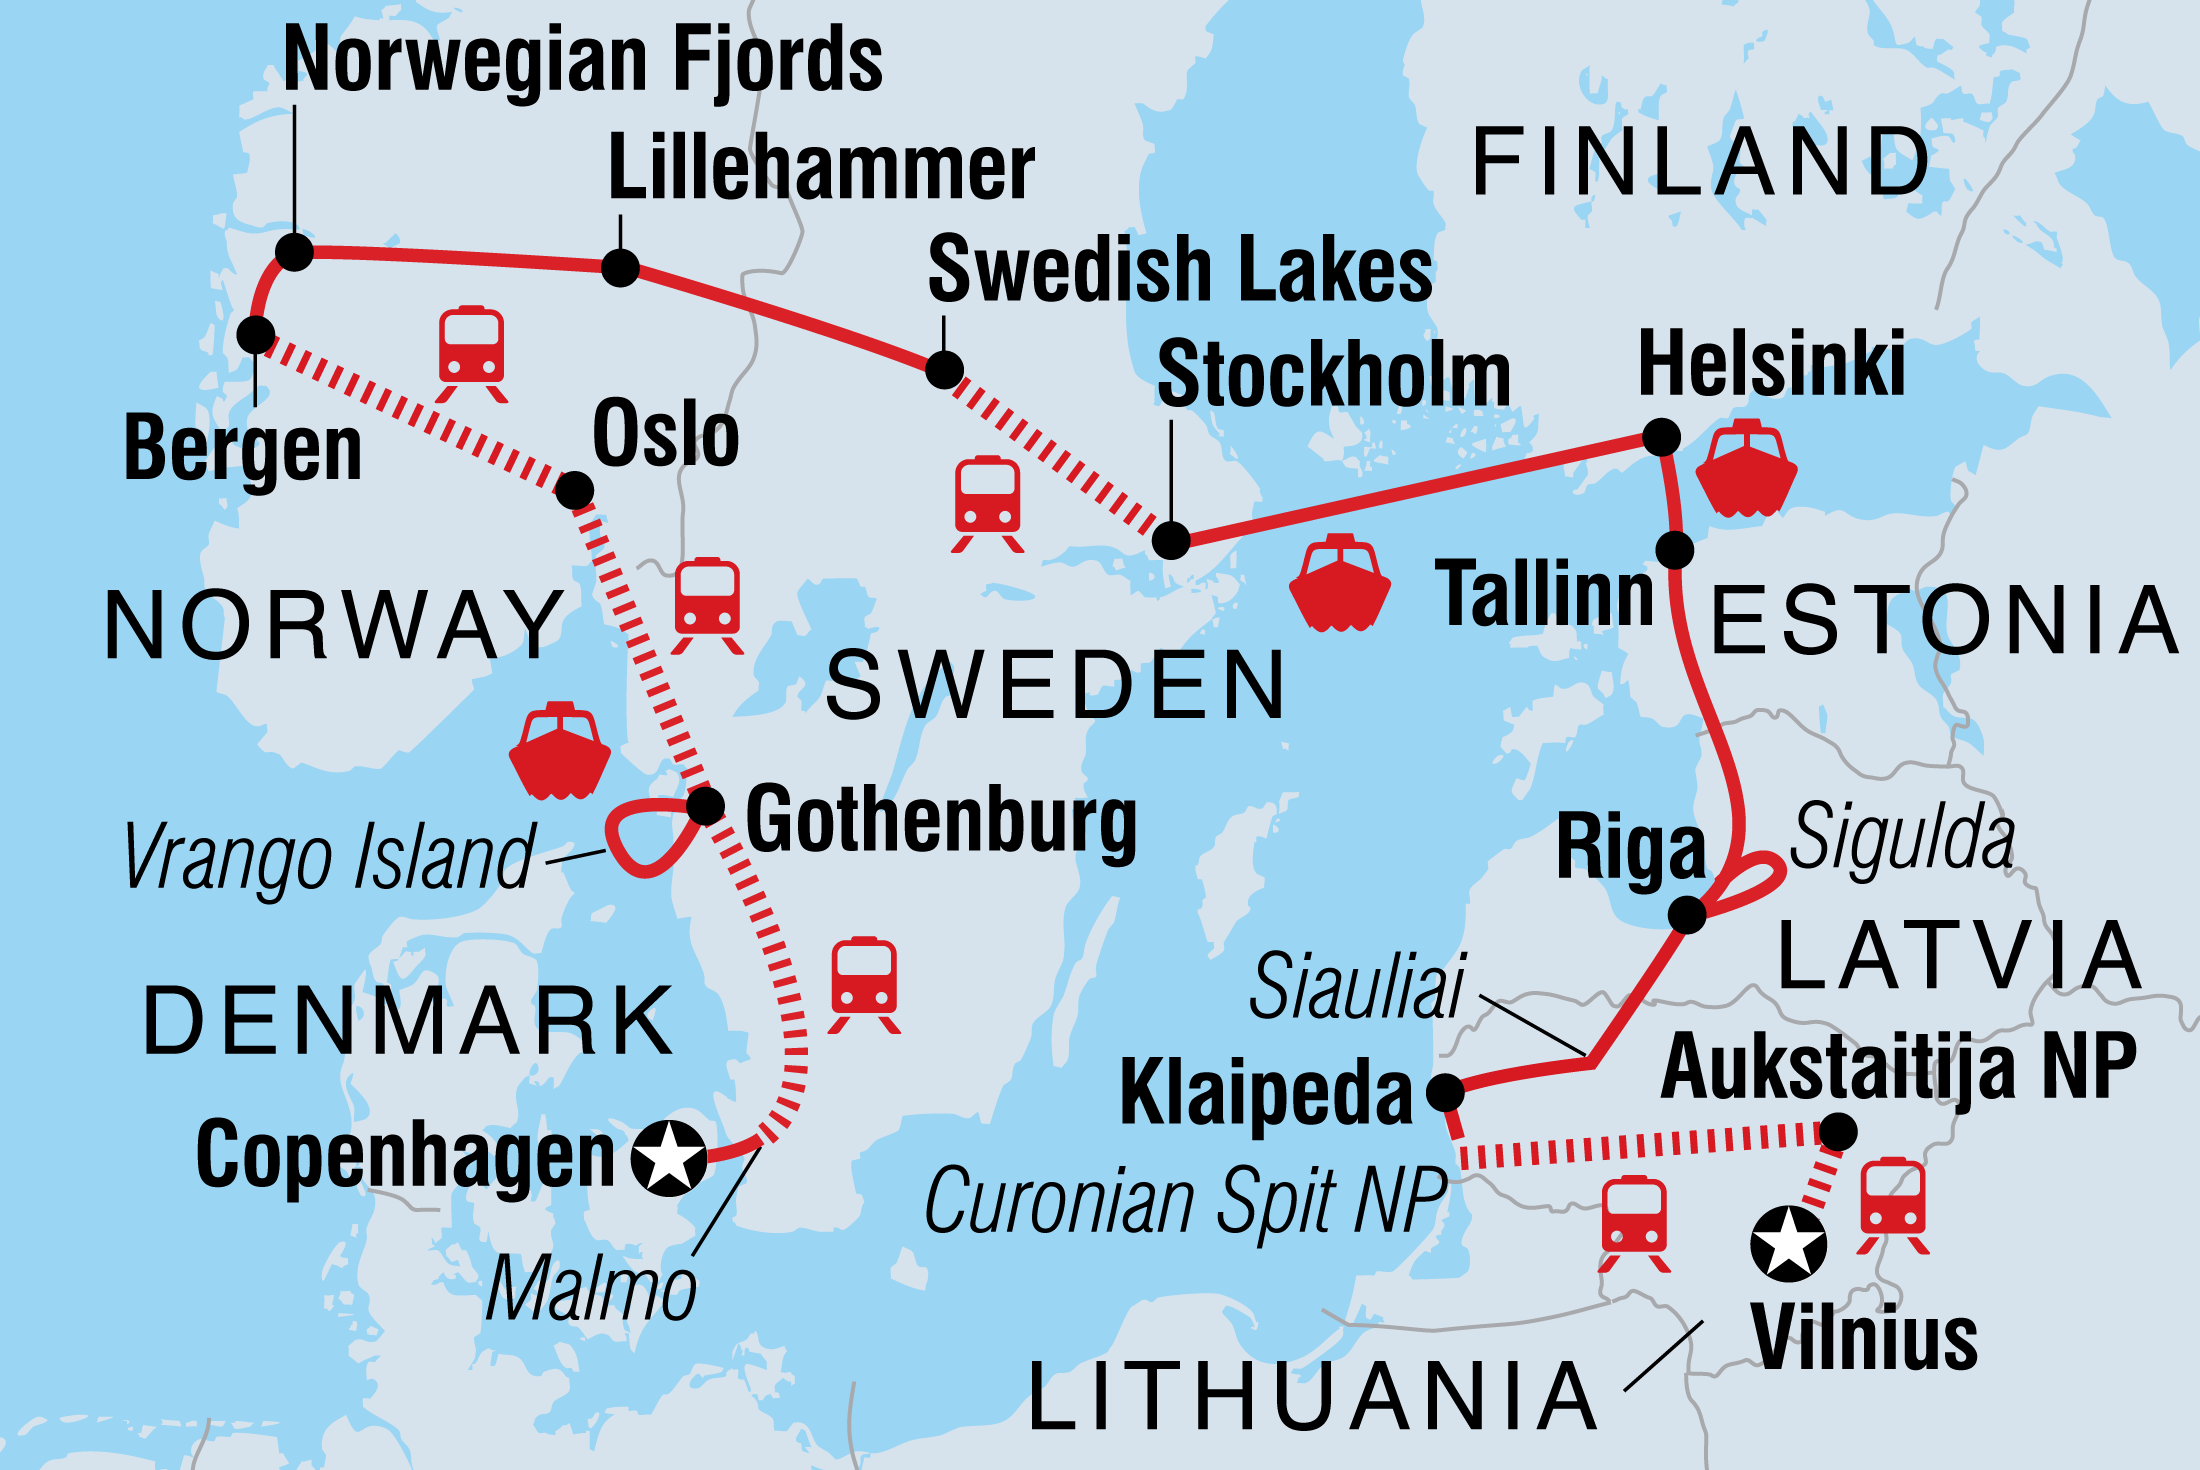 Map of Scandinavia & Baltic Circuit including Denmark, Estonia, Finland, Latvia, Lithuania, Norway and Sweden